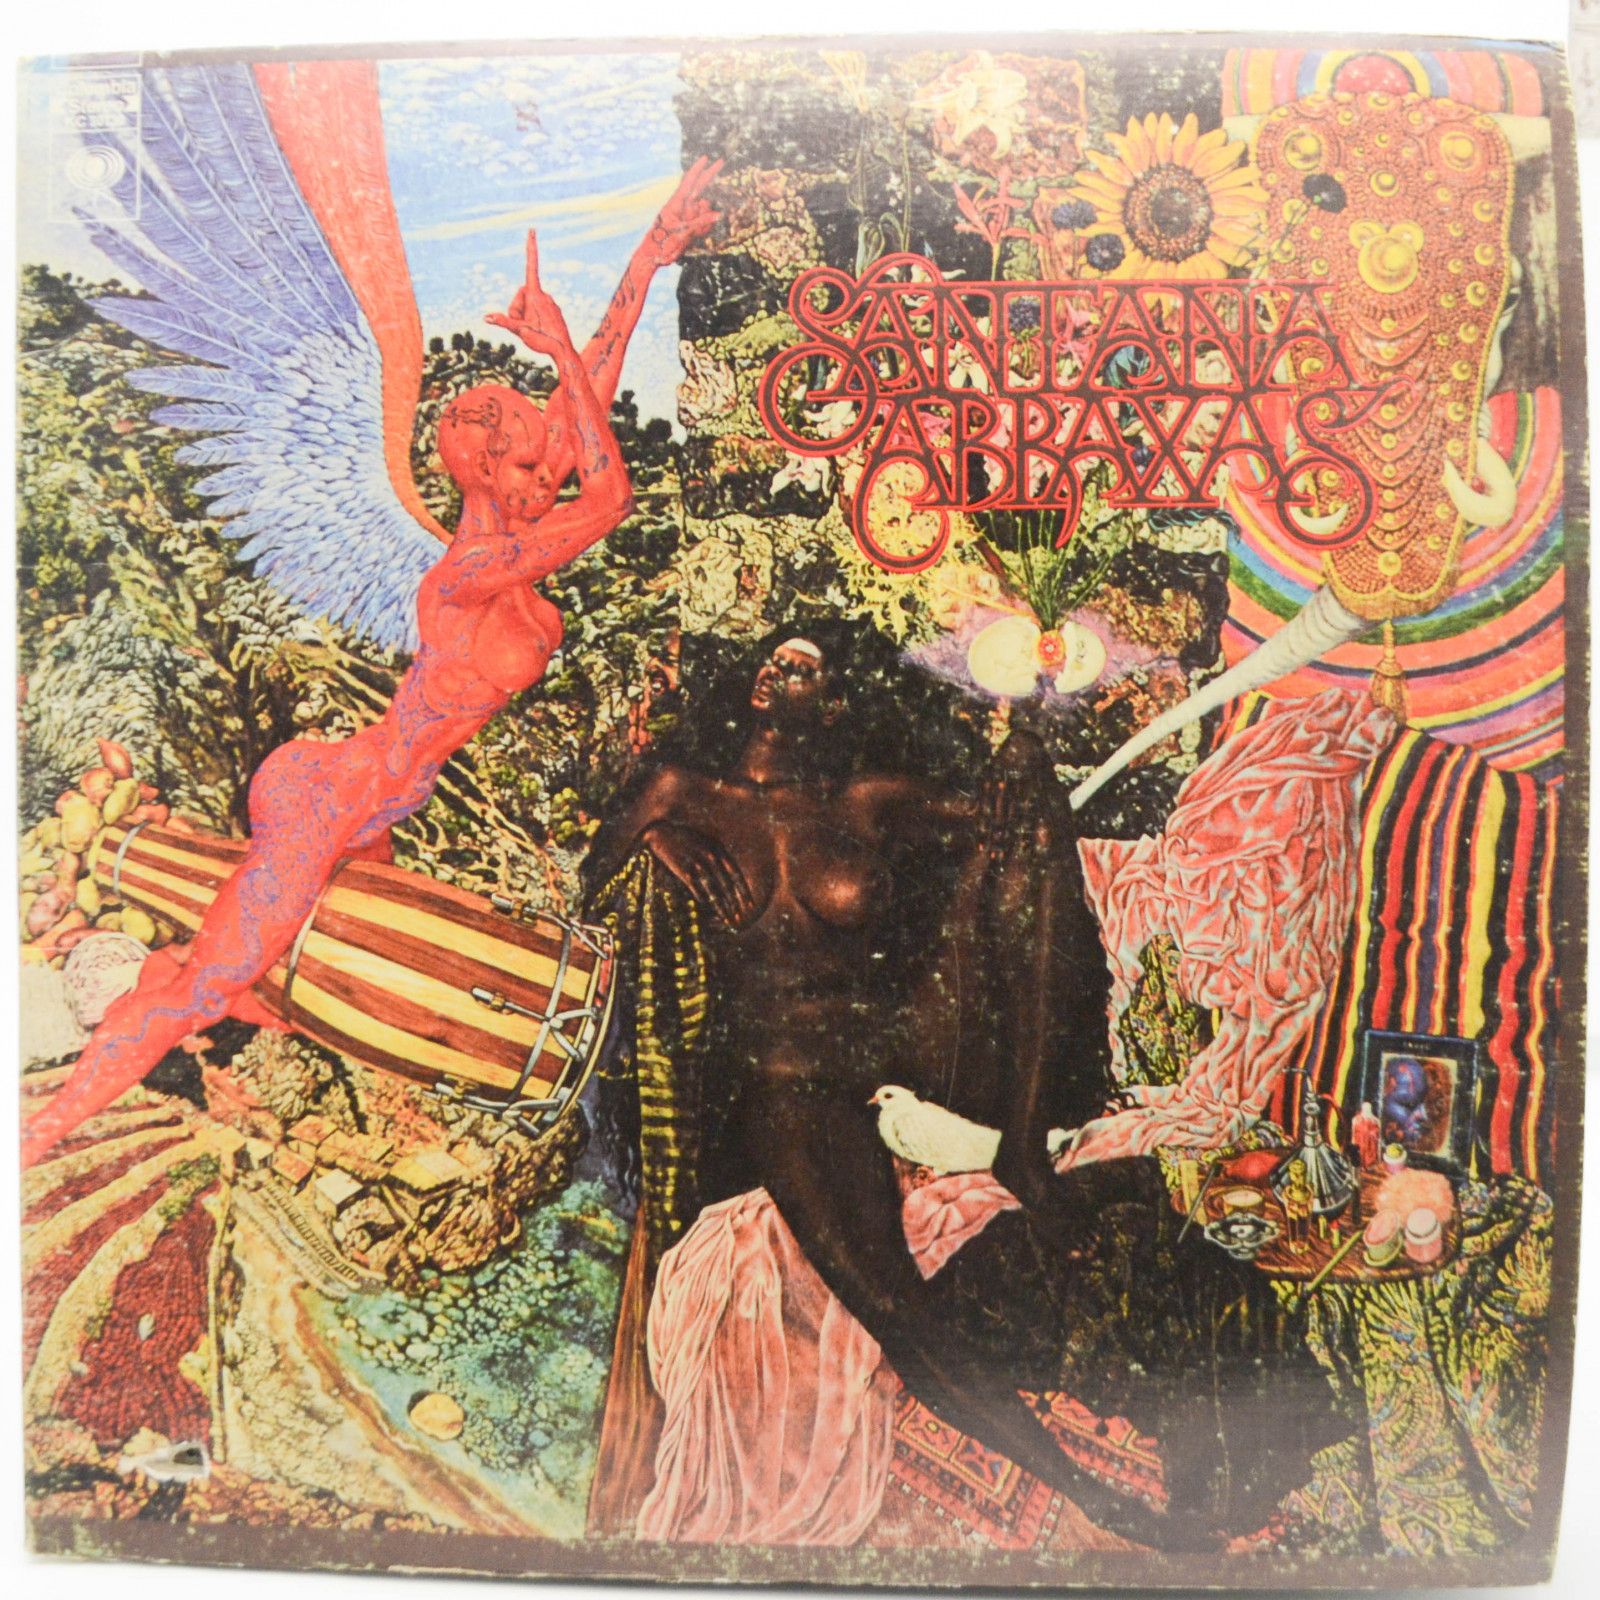 Santana — Abraxas (1-st, USA), 1970